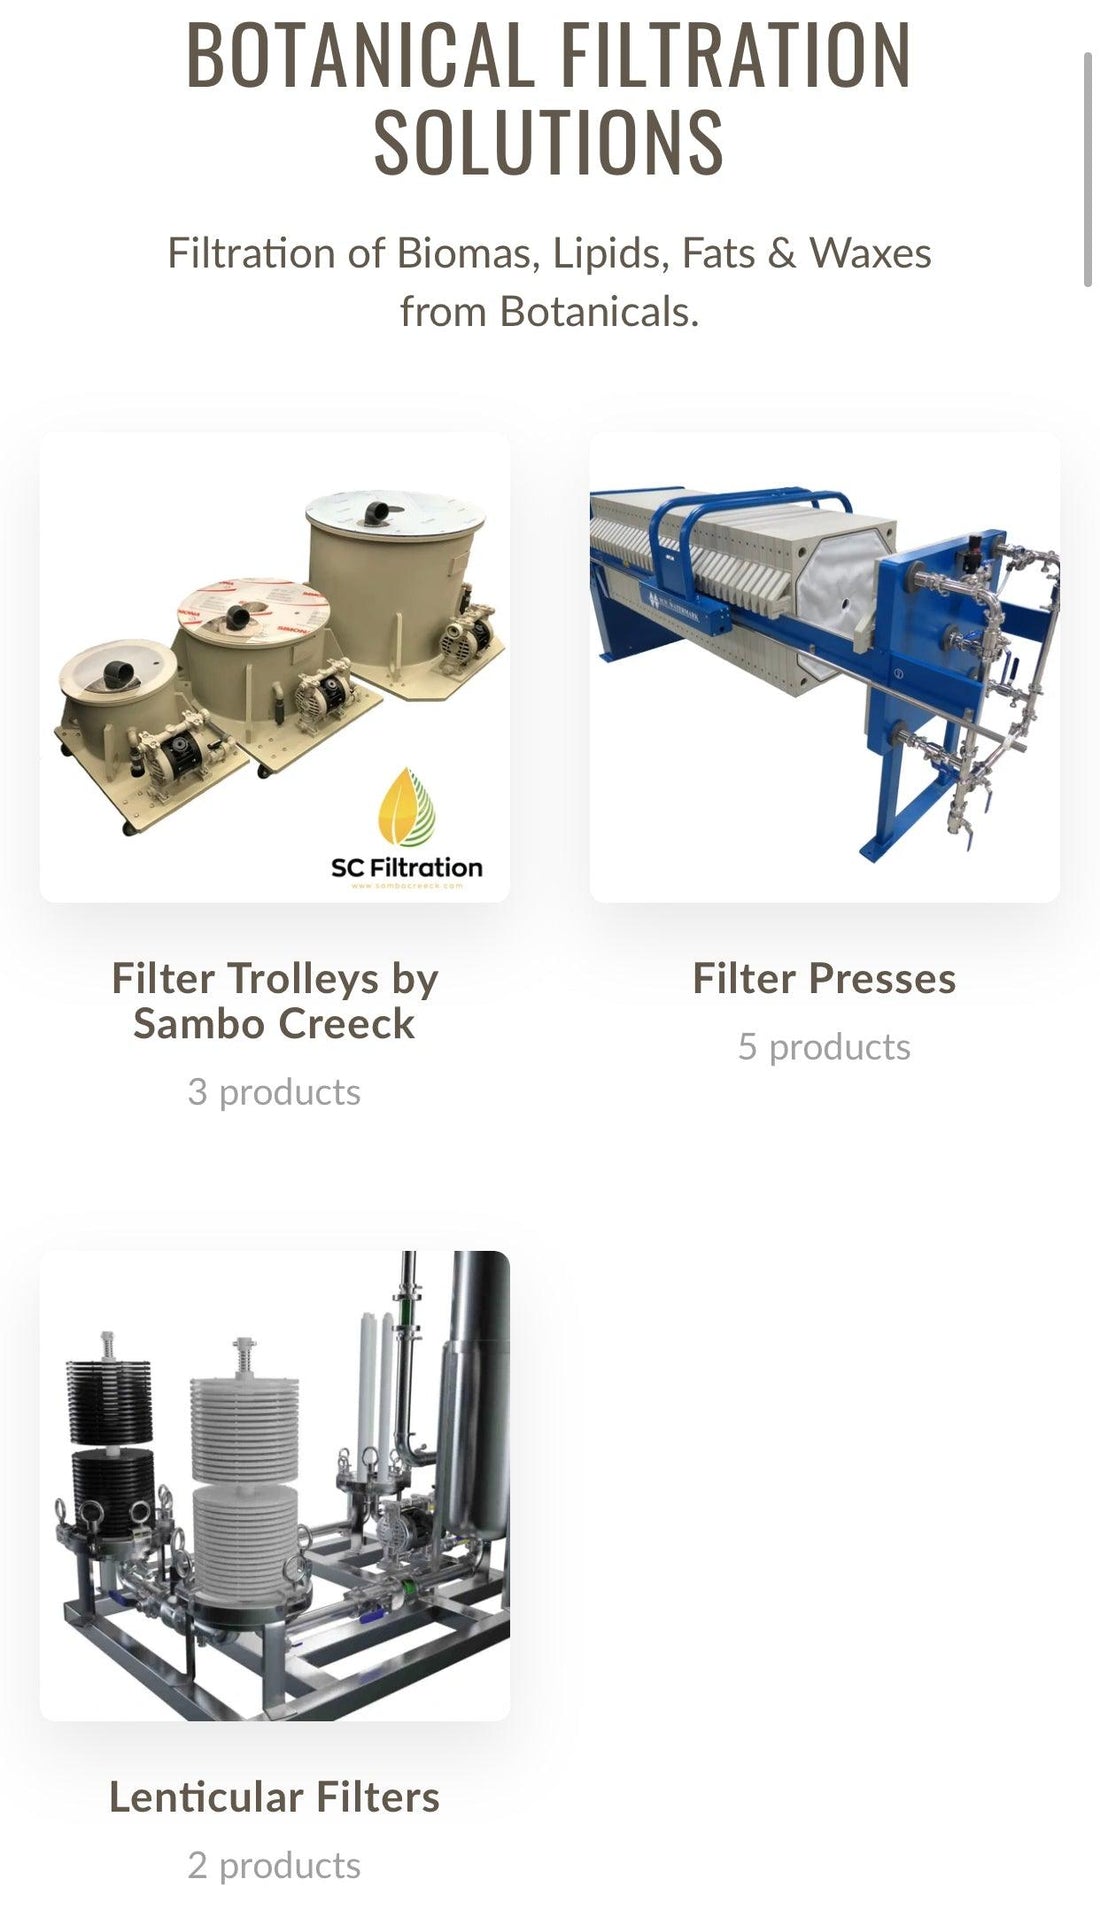 What Filtration System Should I purchase? - SC Filtration